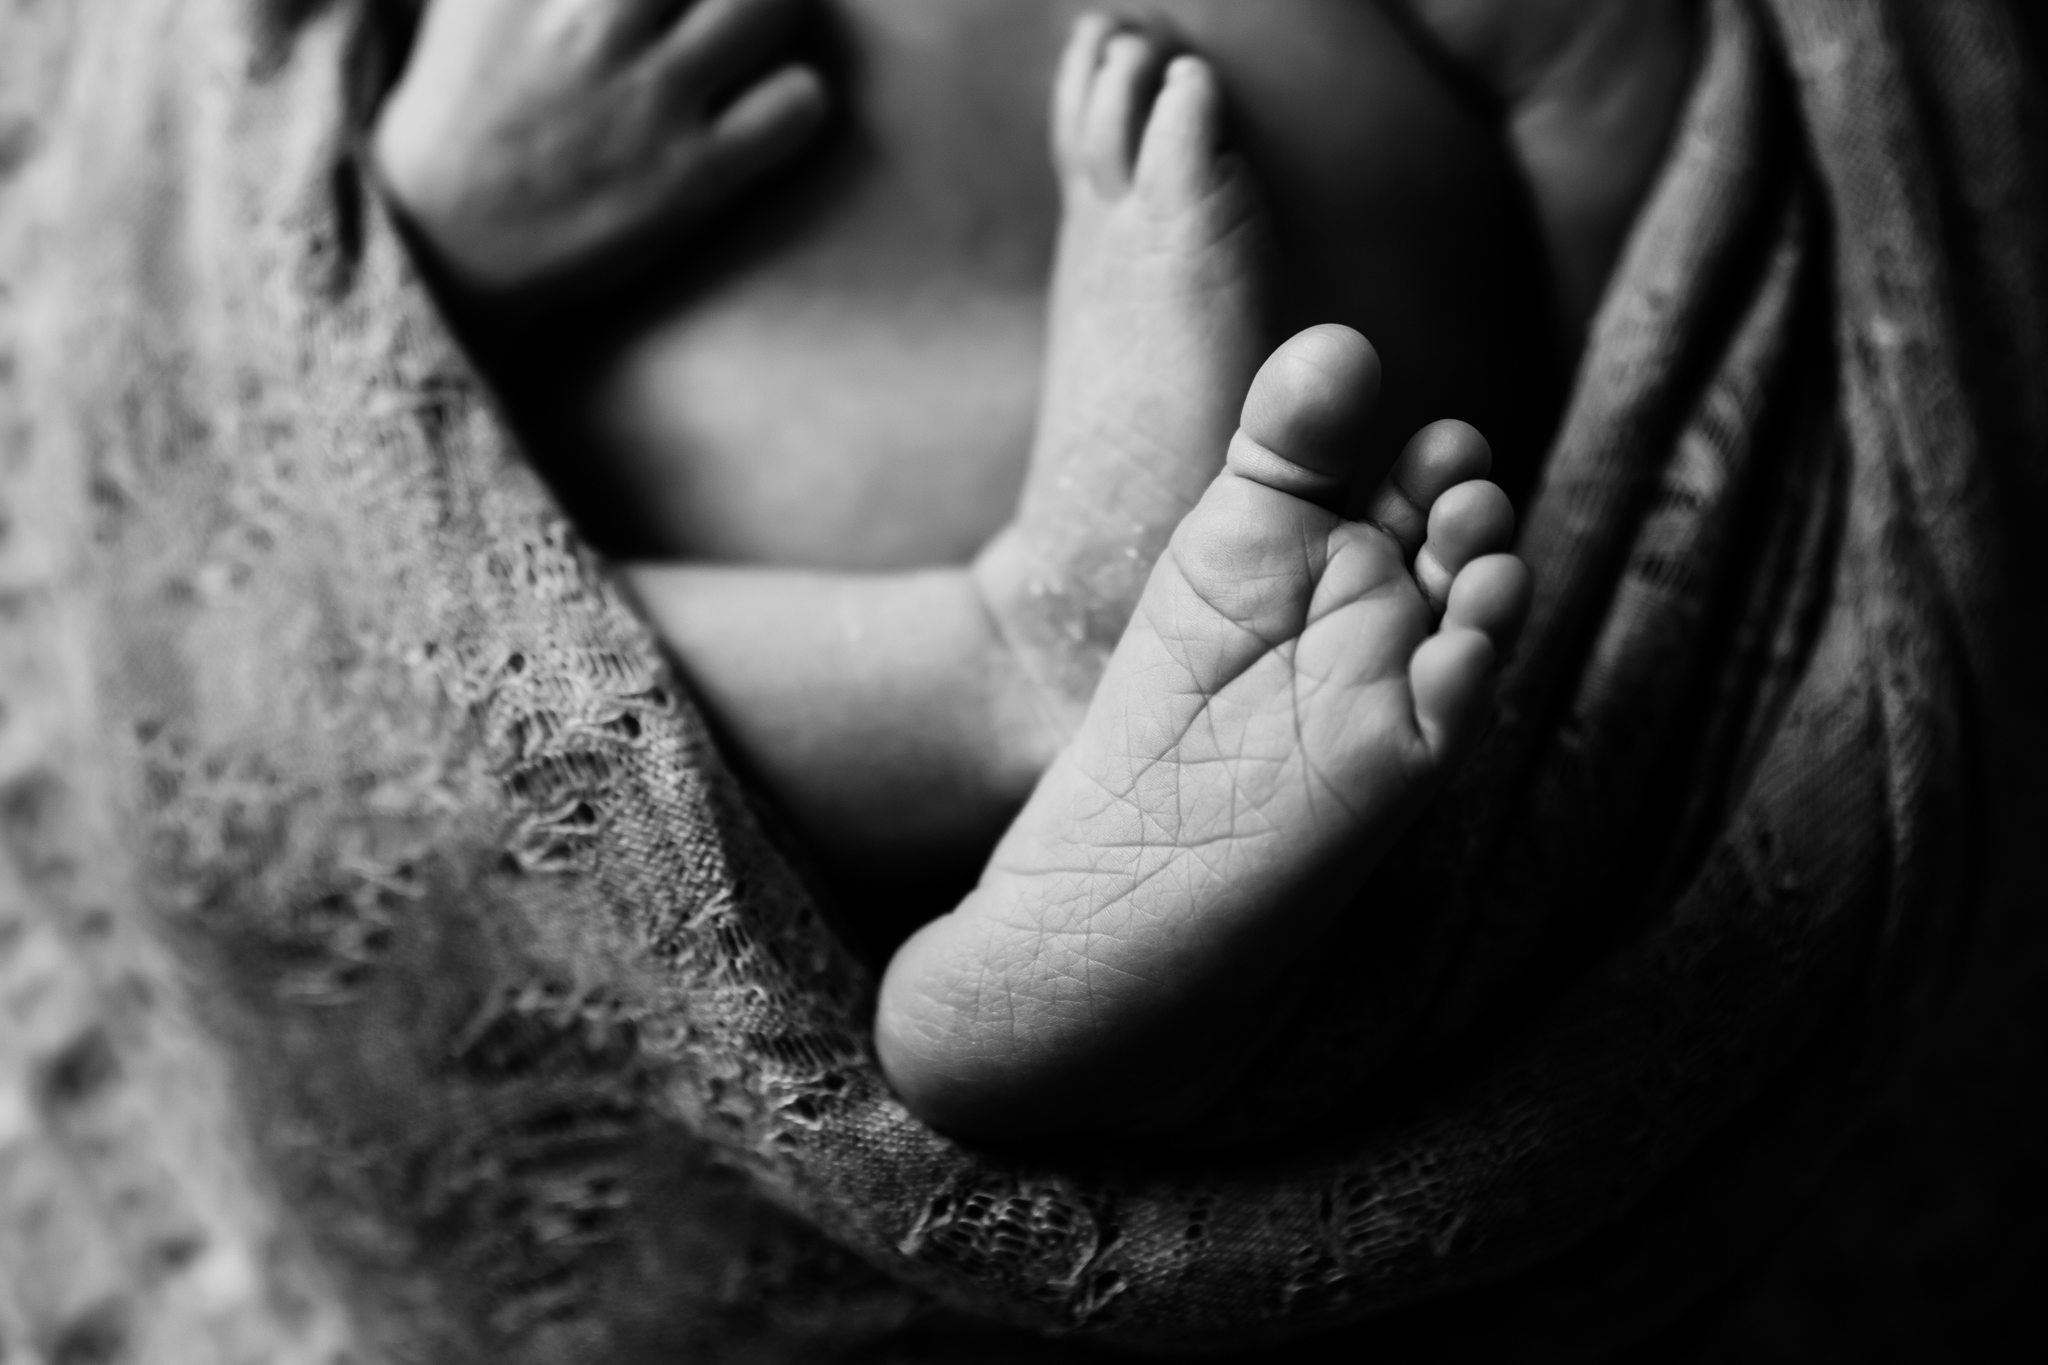 Westminster Colorado Newborn photographer baby feet